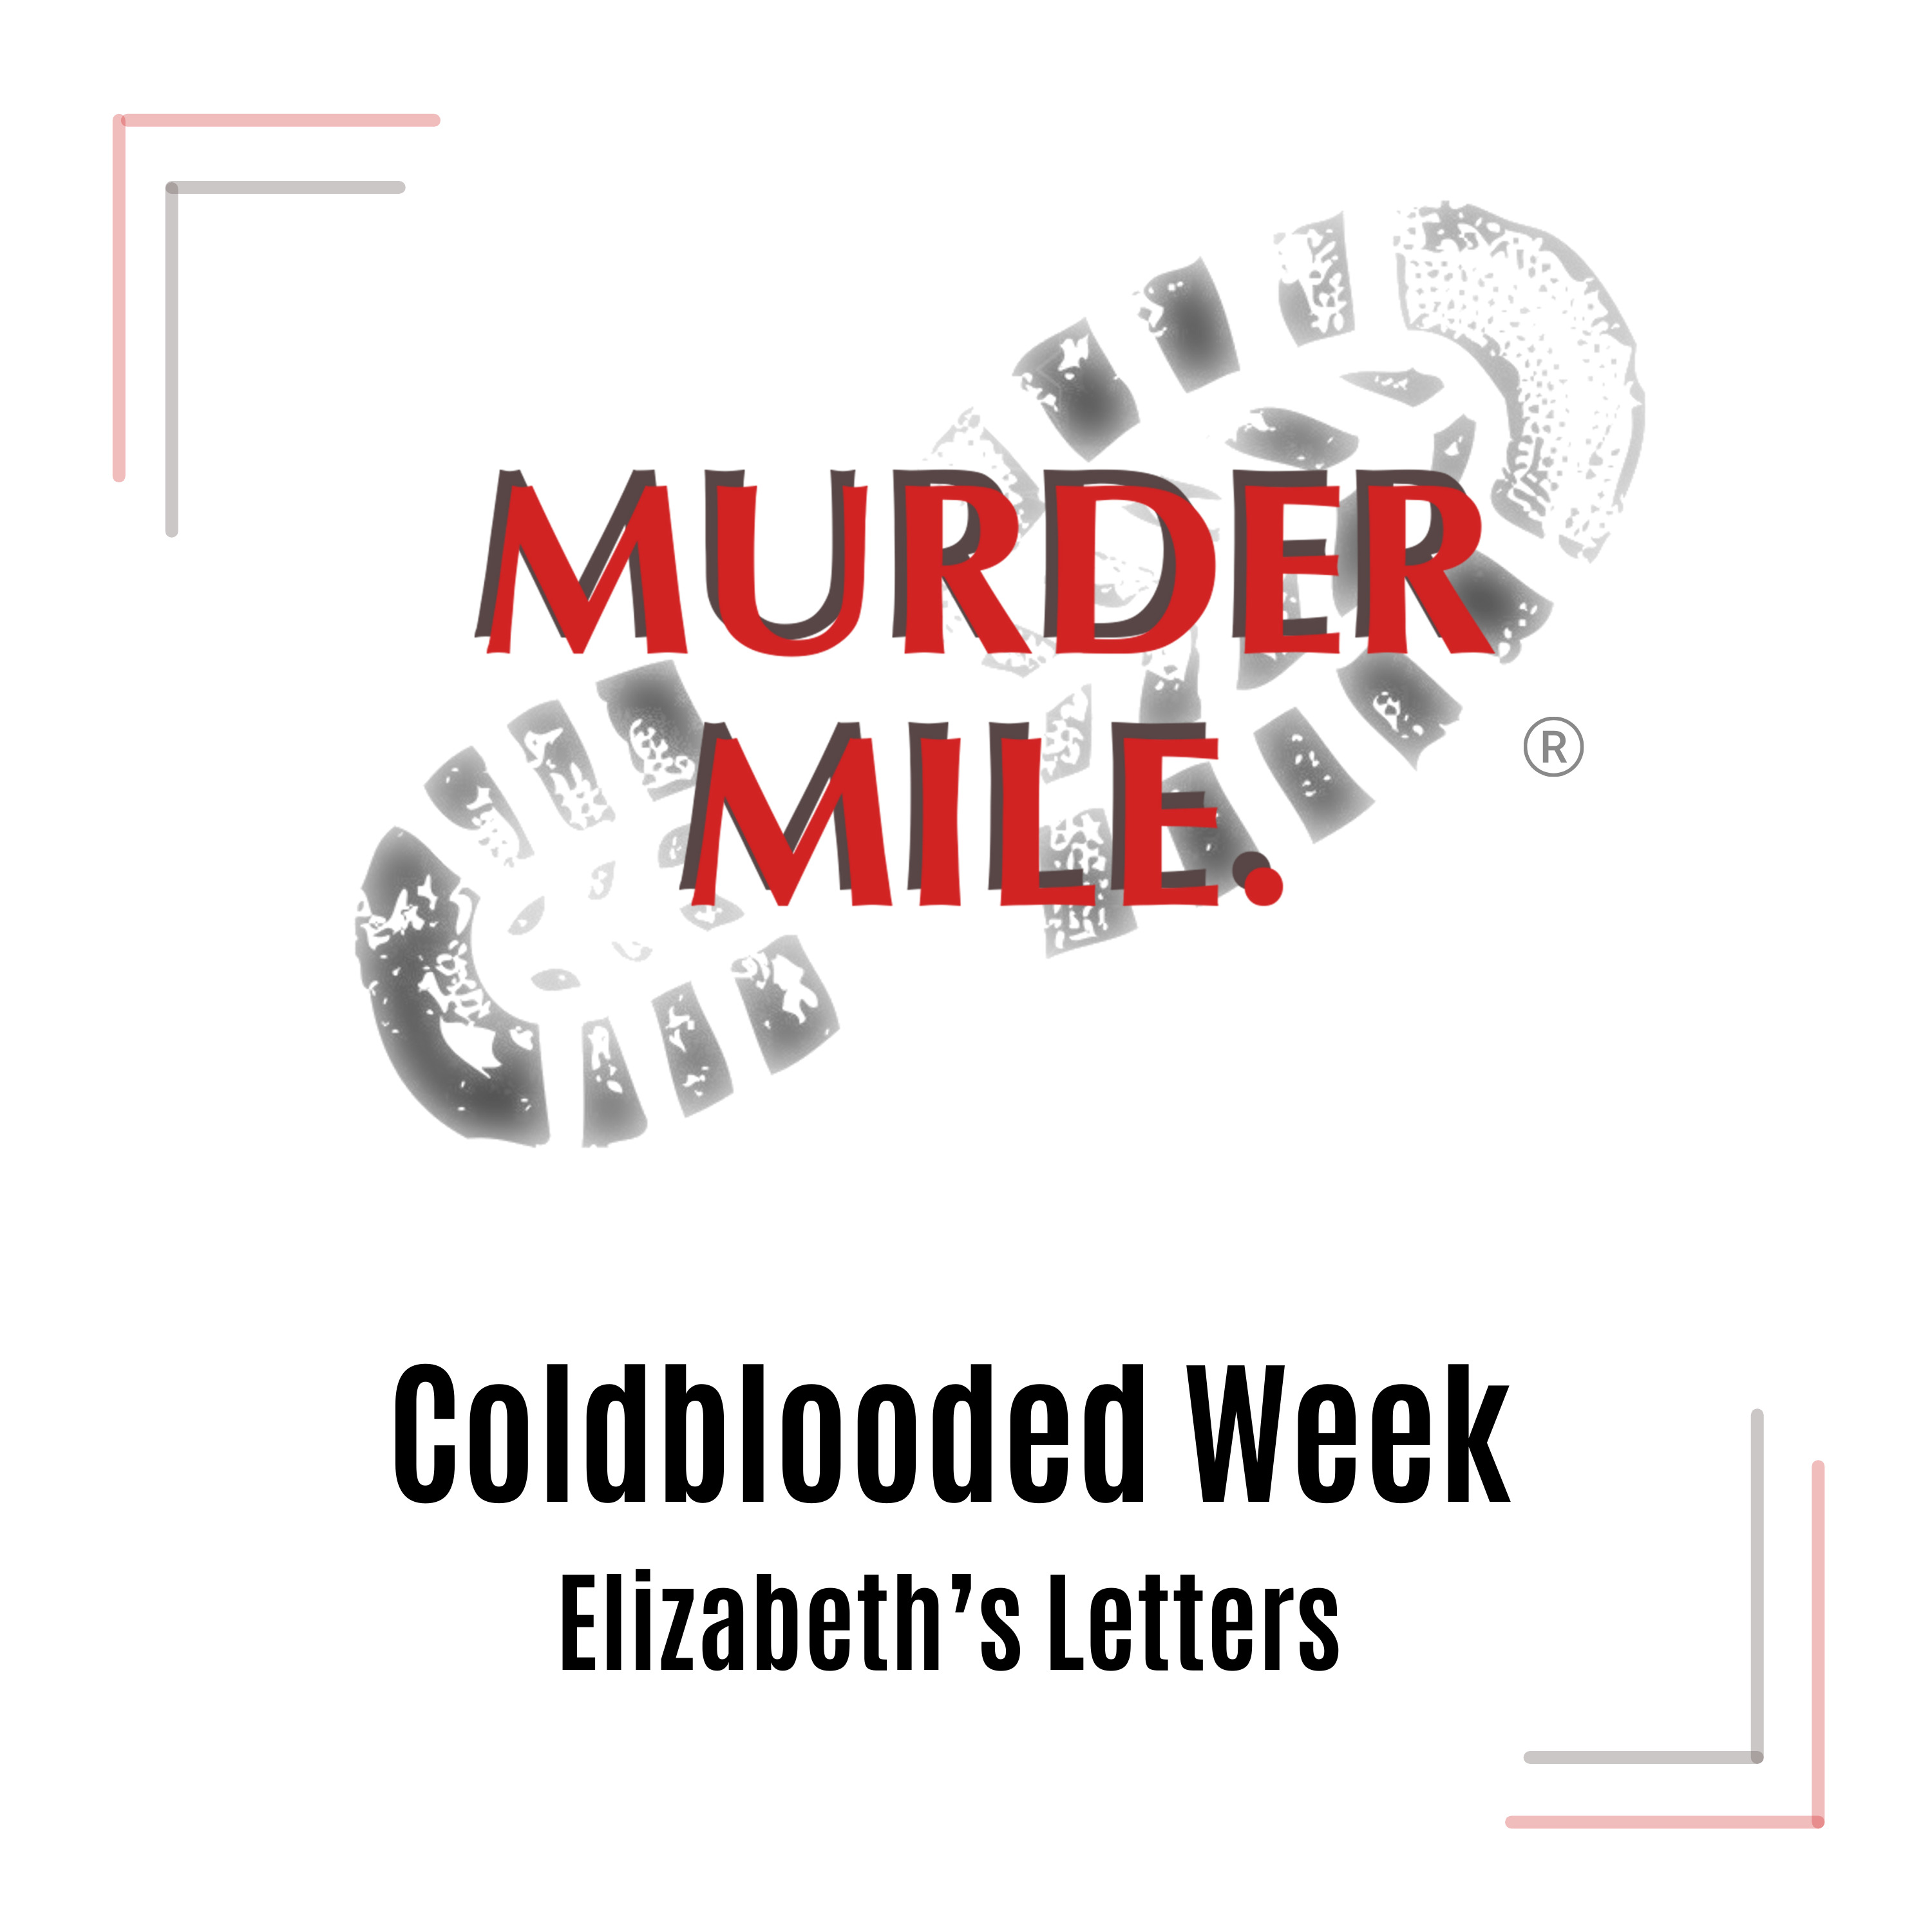 Coldblooded Week - Elizabeth's Letter from Prison